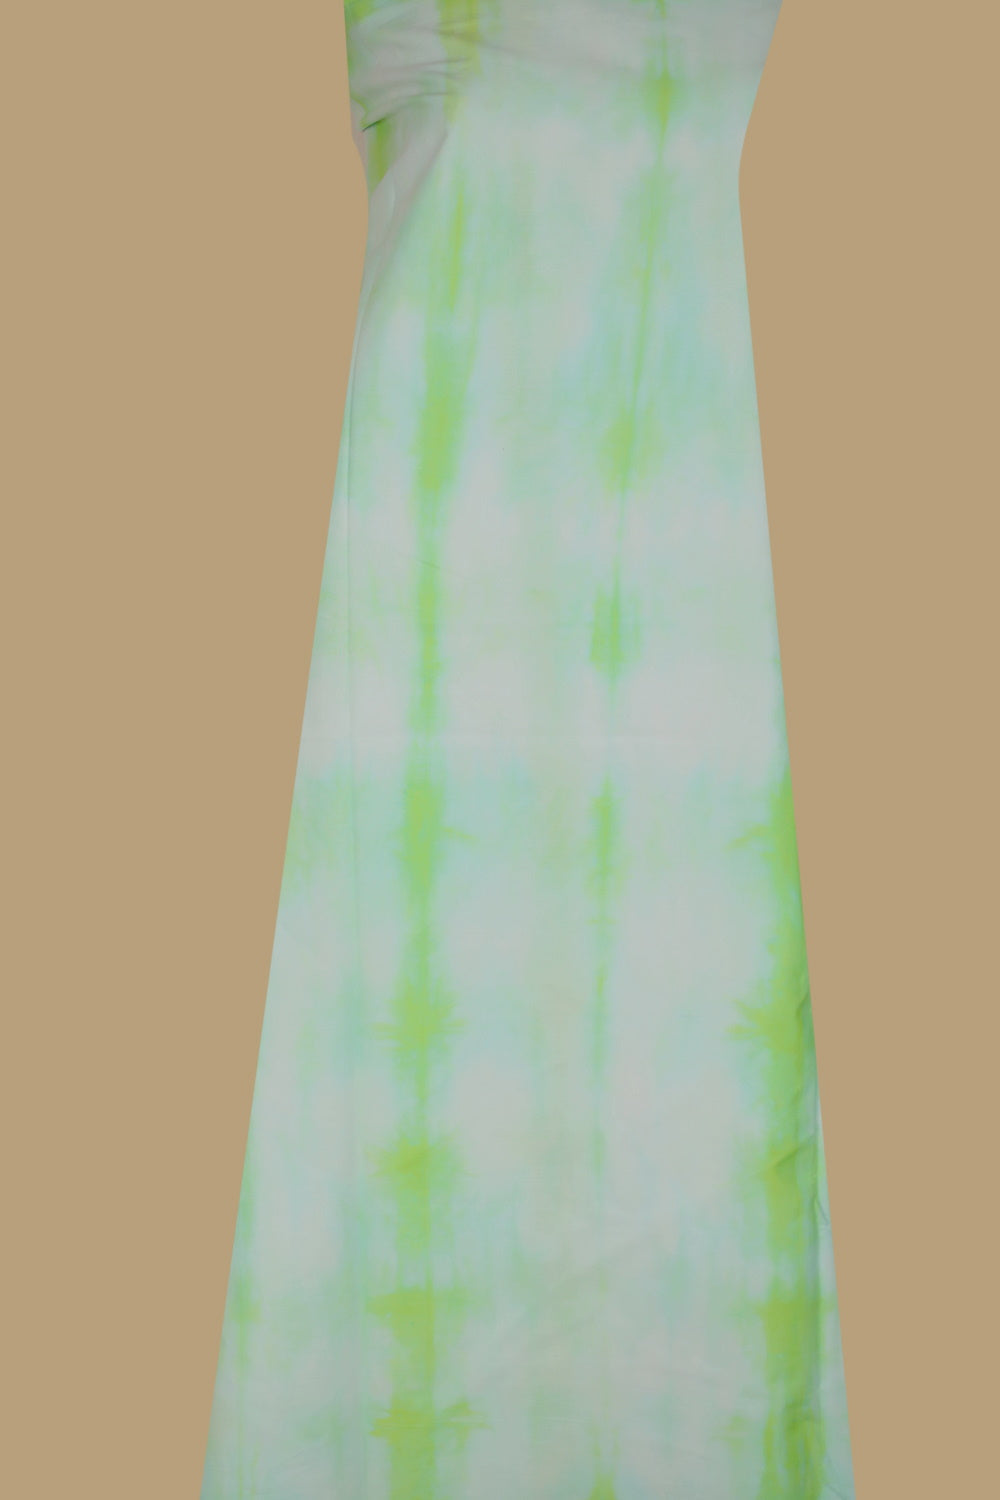 Shades of Yellow and Green Tie & Dye Kurta Fabric - 2.4m